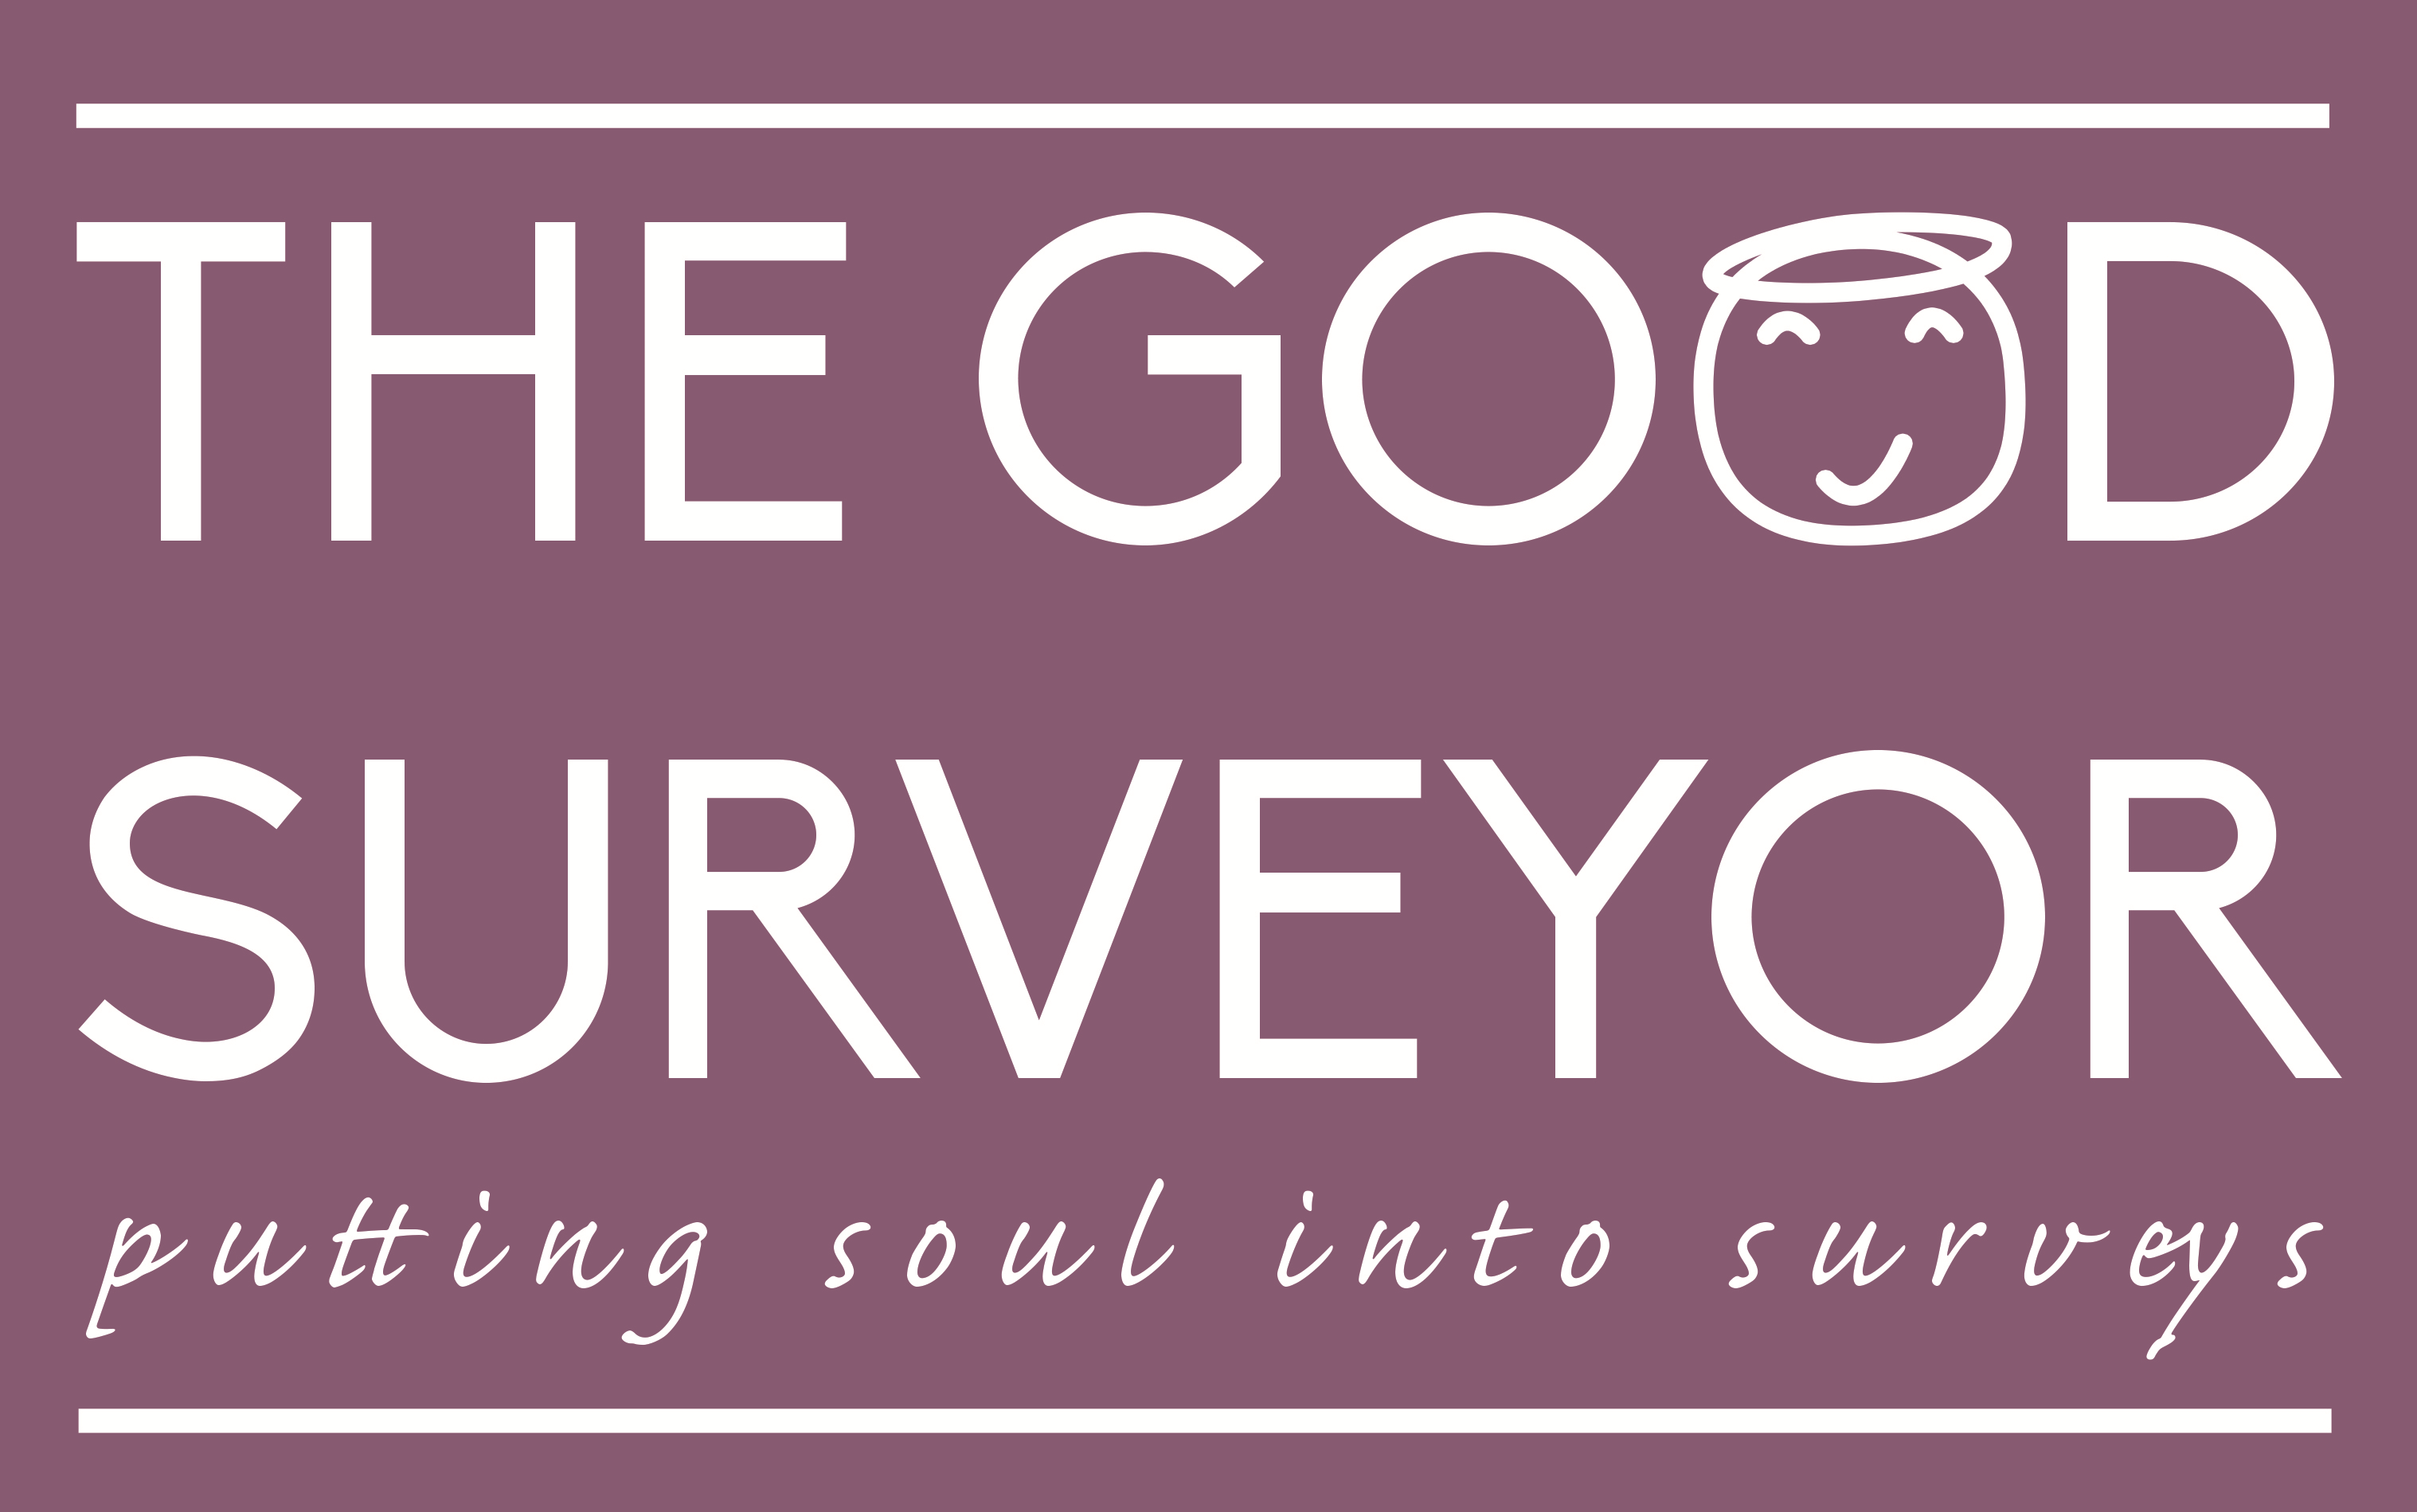 The-Good-Surveyor-Limited